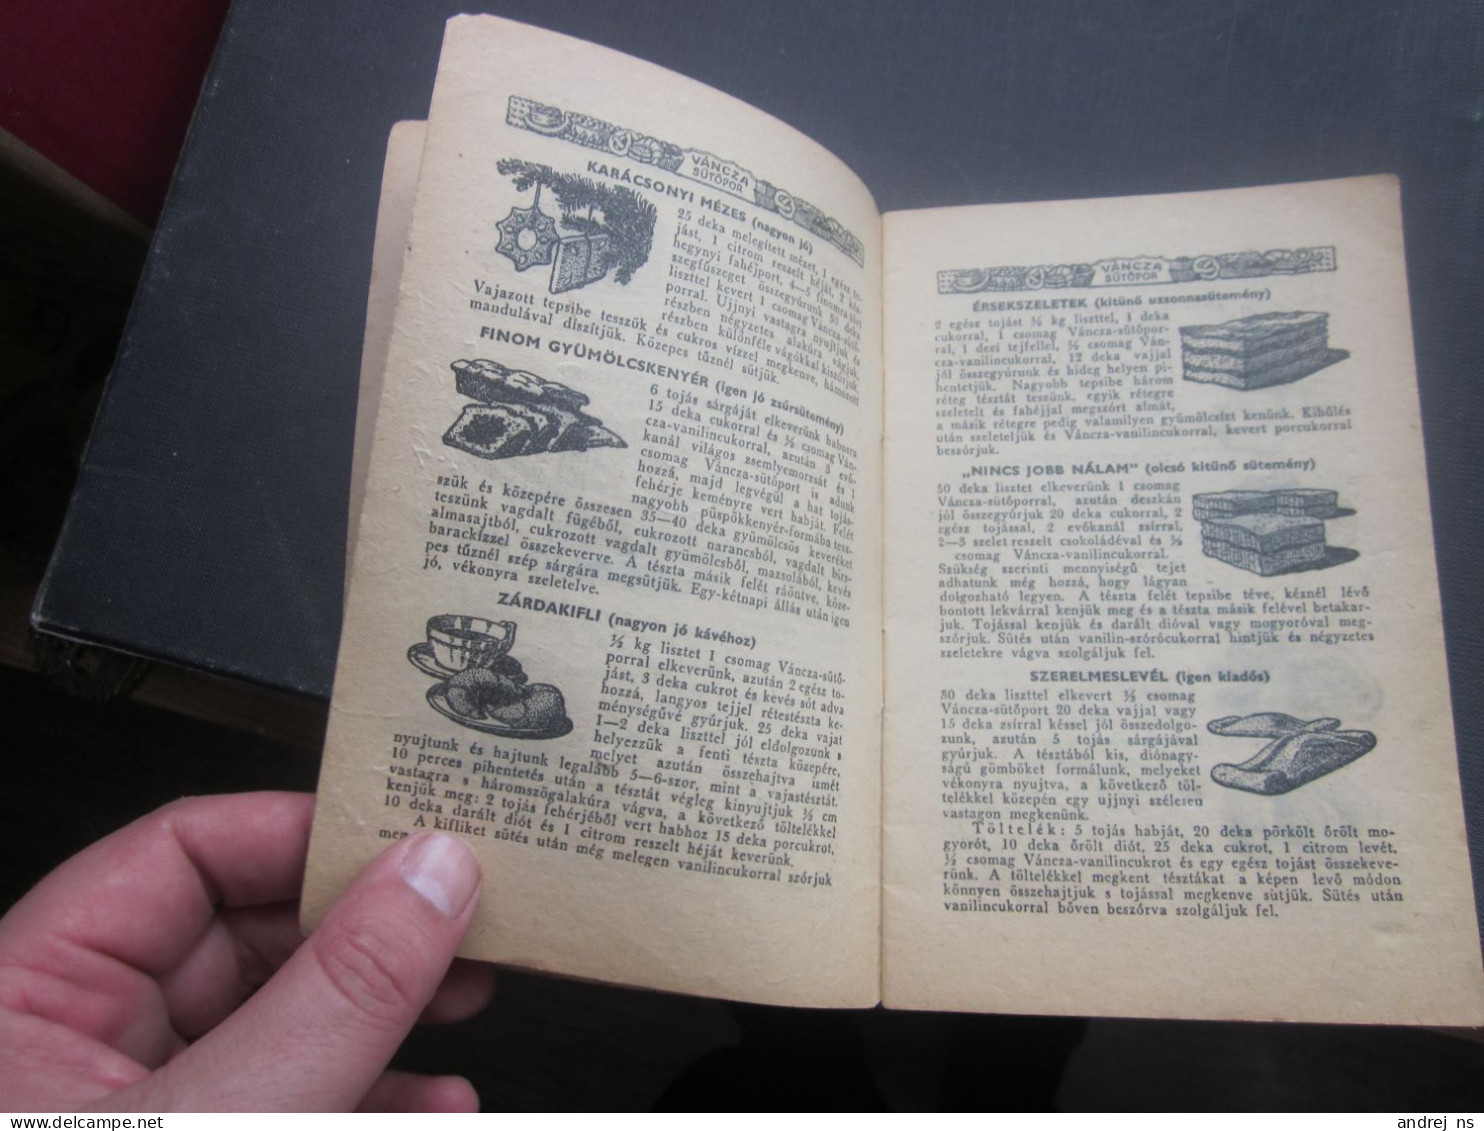 Book Of Recipes For Cakes Hungari Kincses Receptkony Vancza Sutopor - Livres Anciens